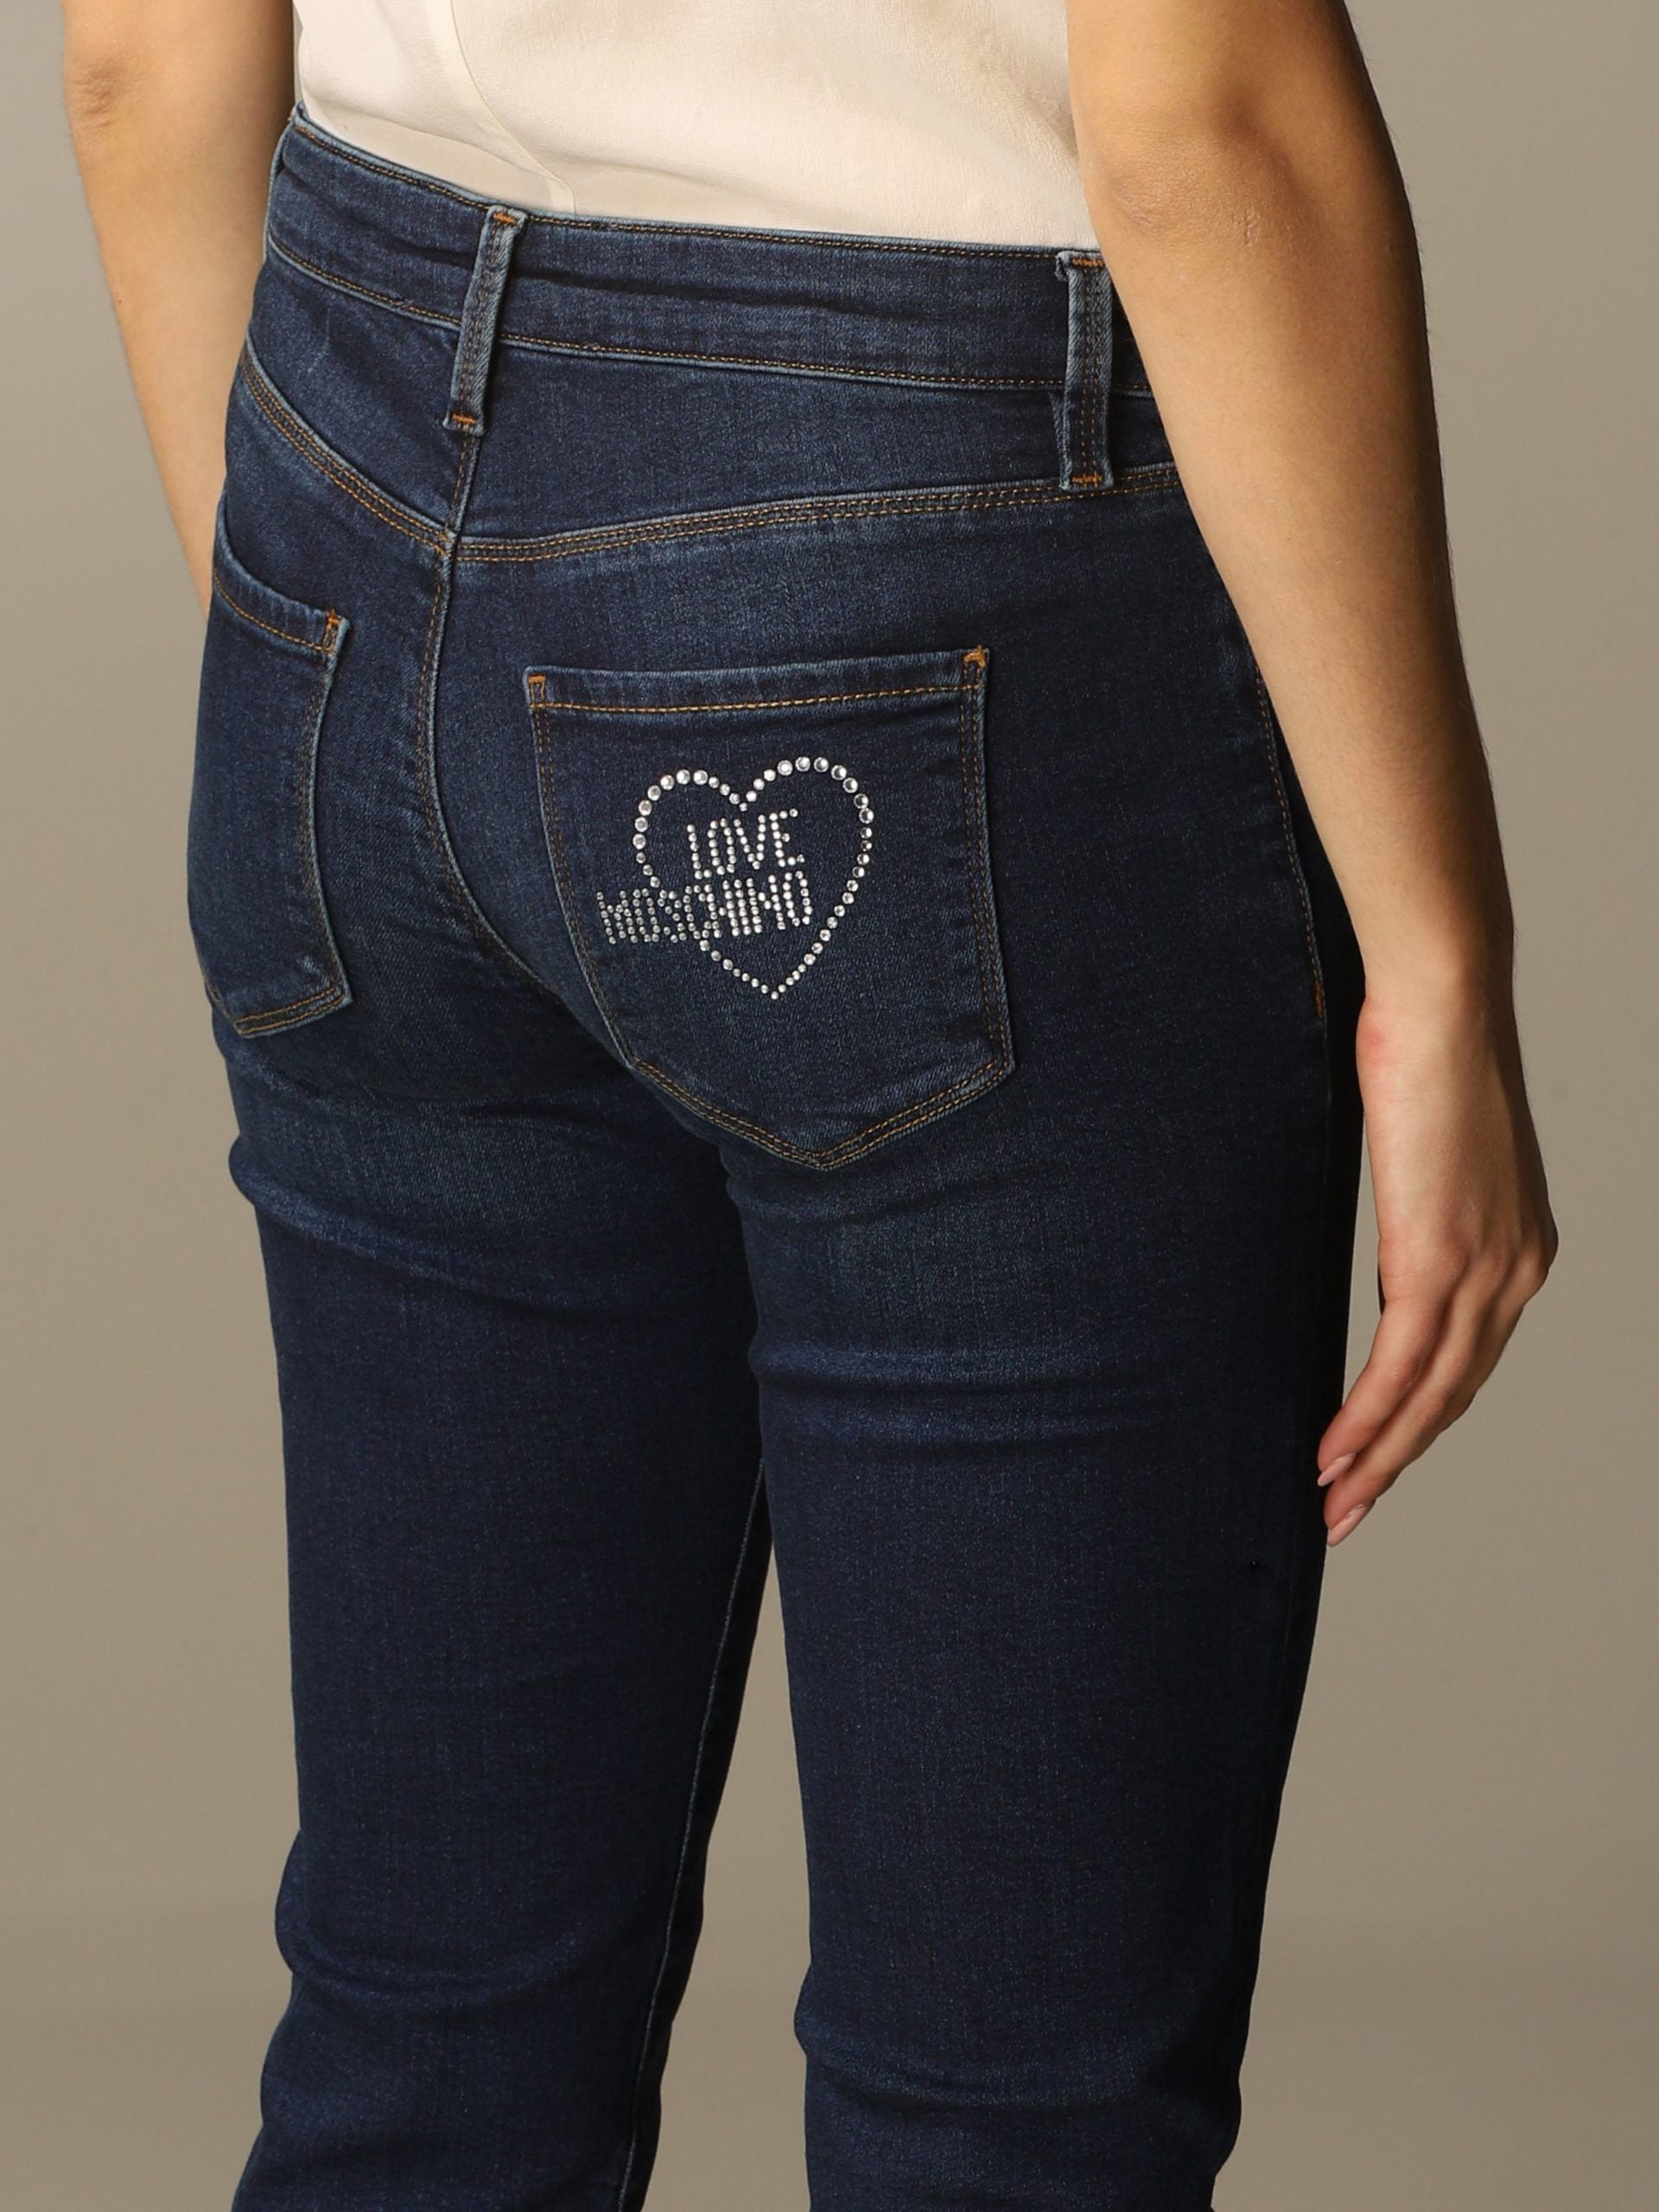 Love Moschino Chic Rhinestone Back Logo Jeans